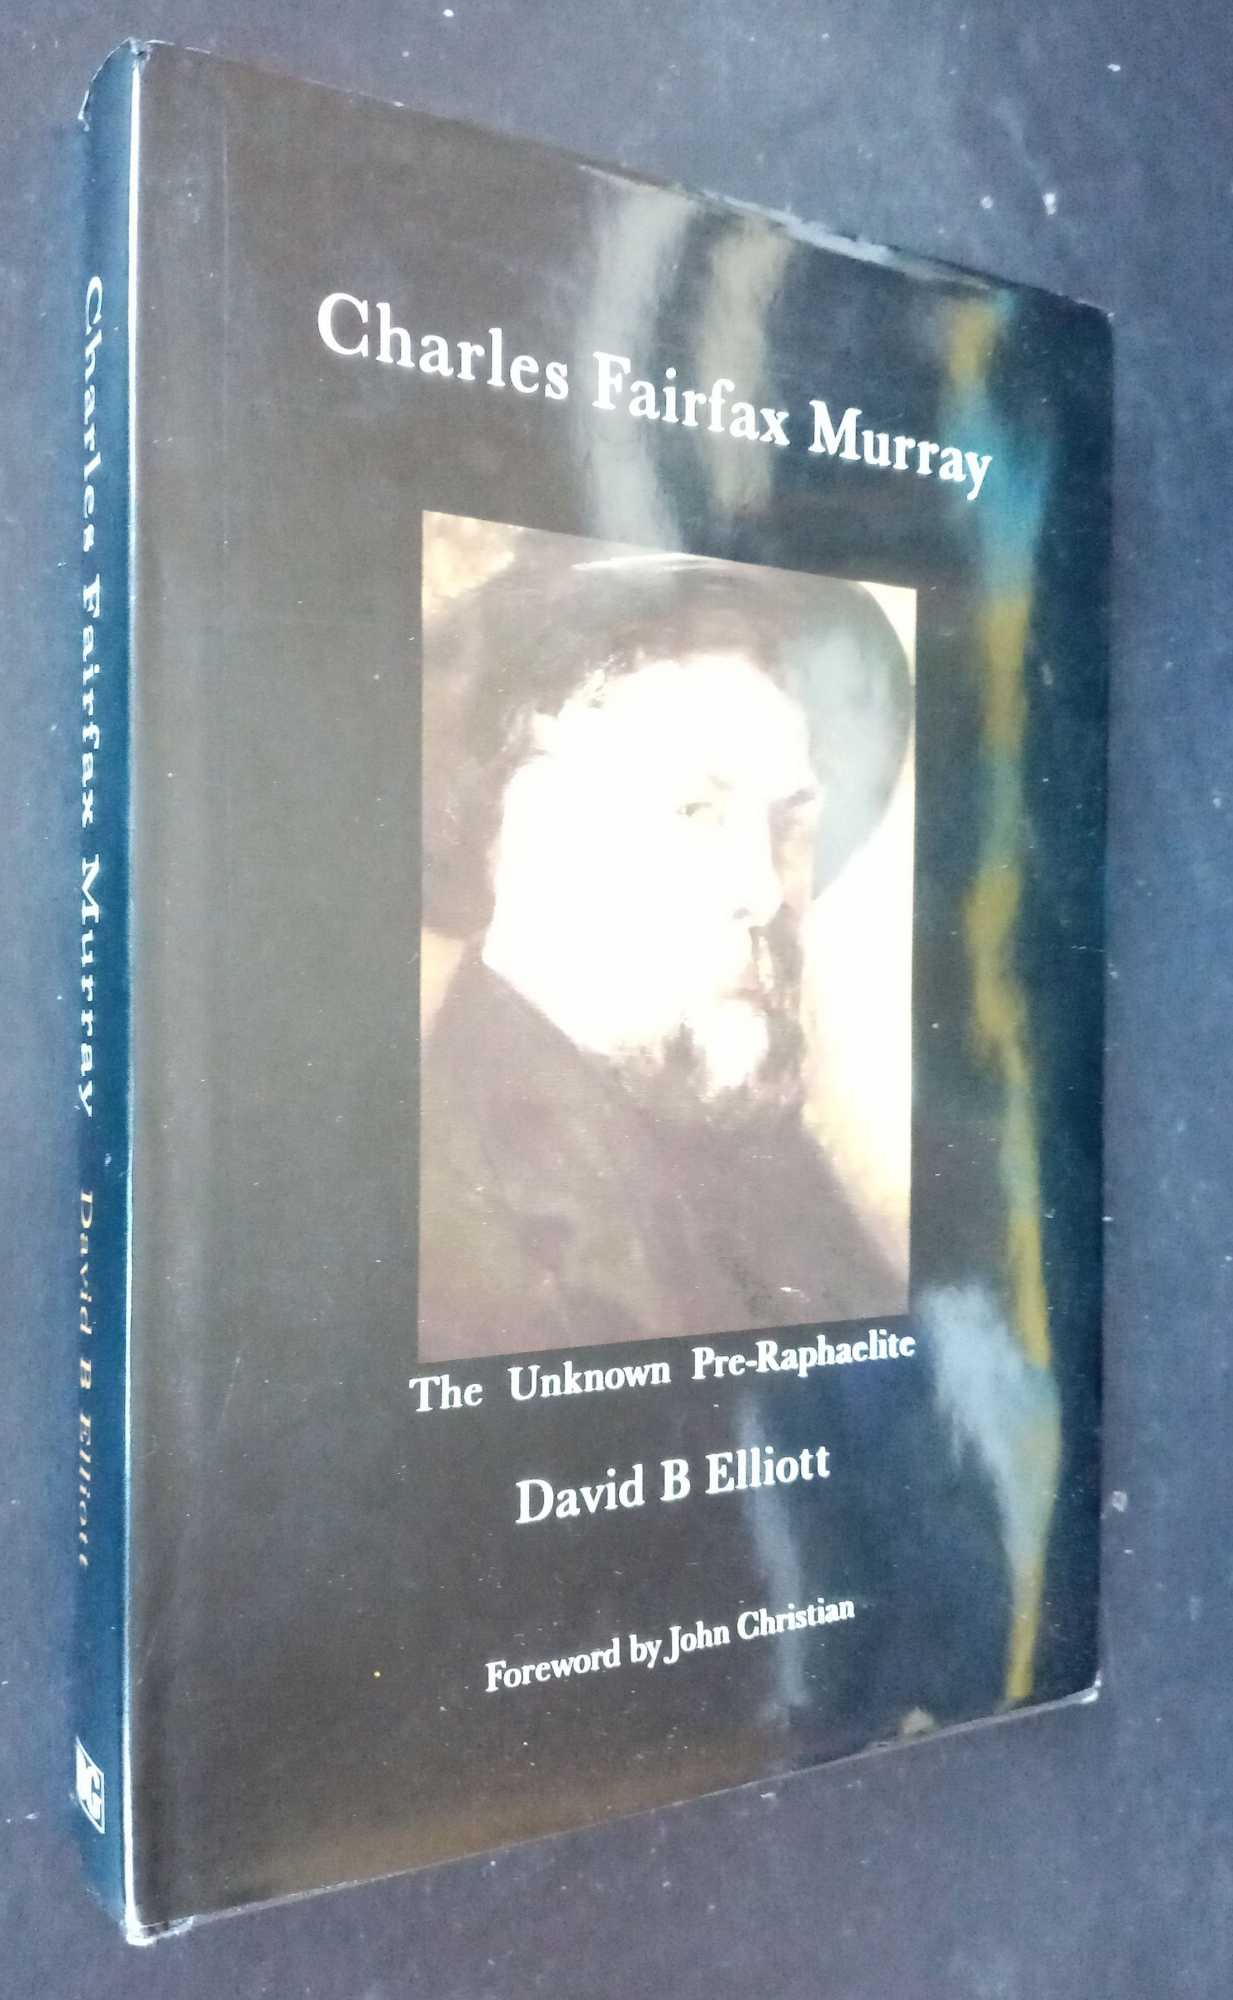 Elliott, David B. - Charles Fairfax Murray: The Unknown Pre-Raphaelite